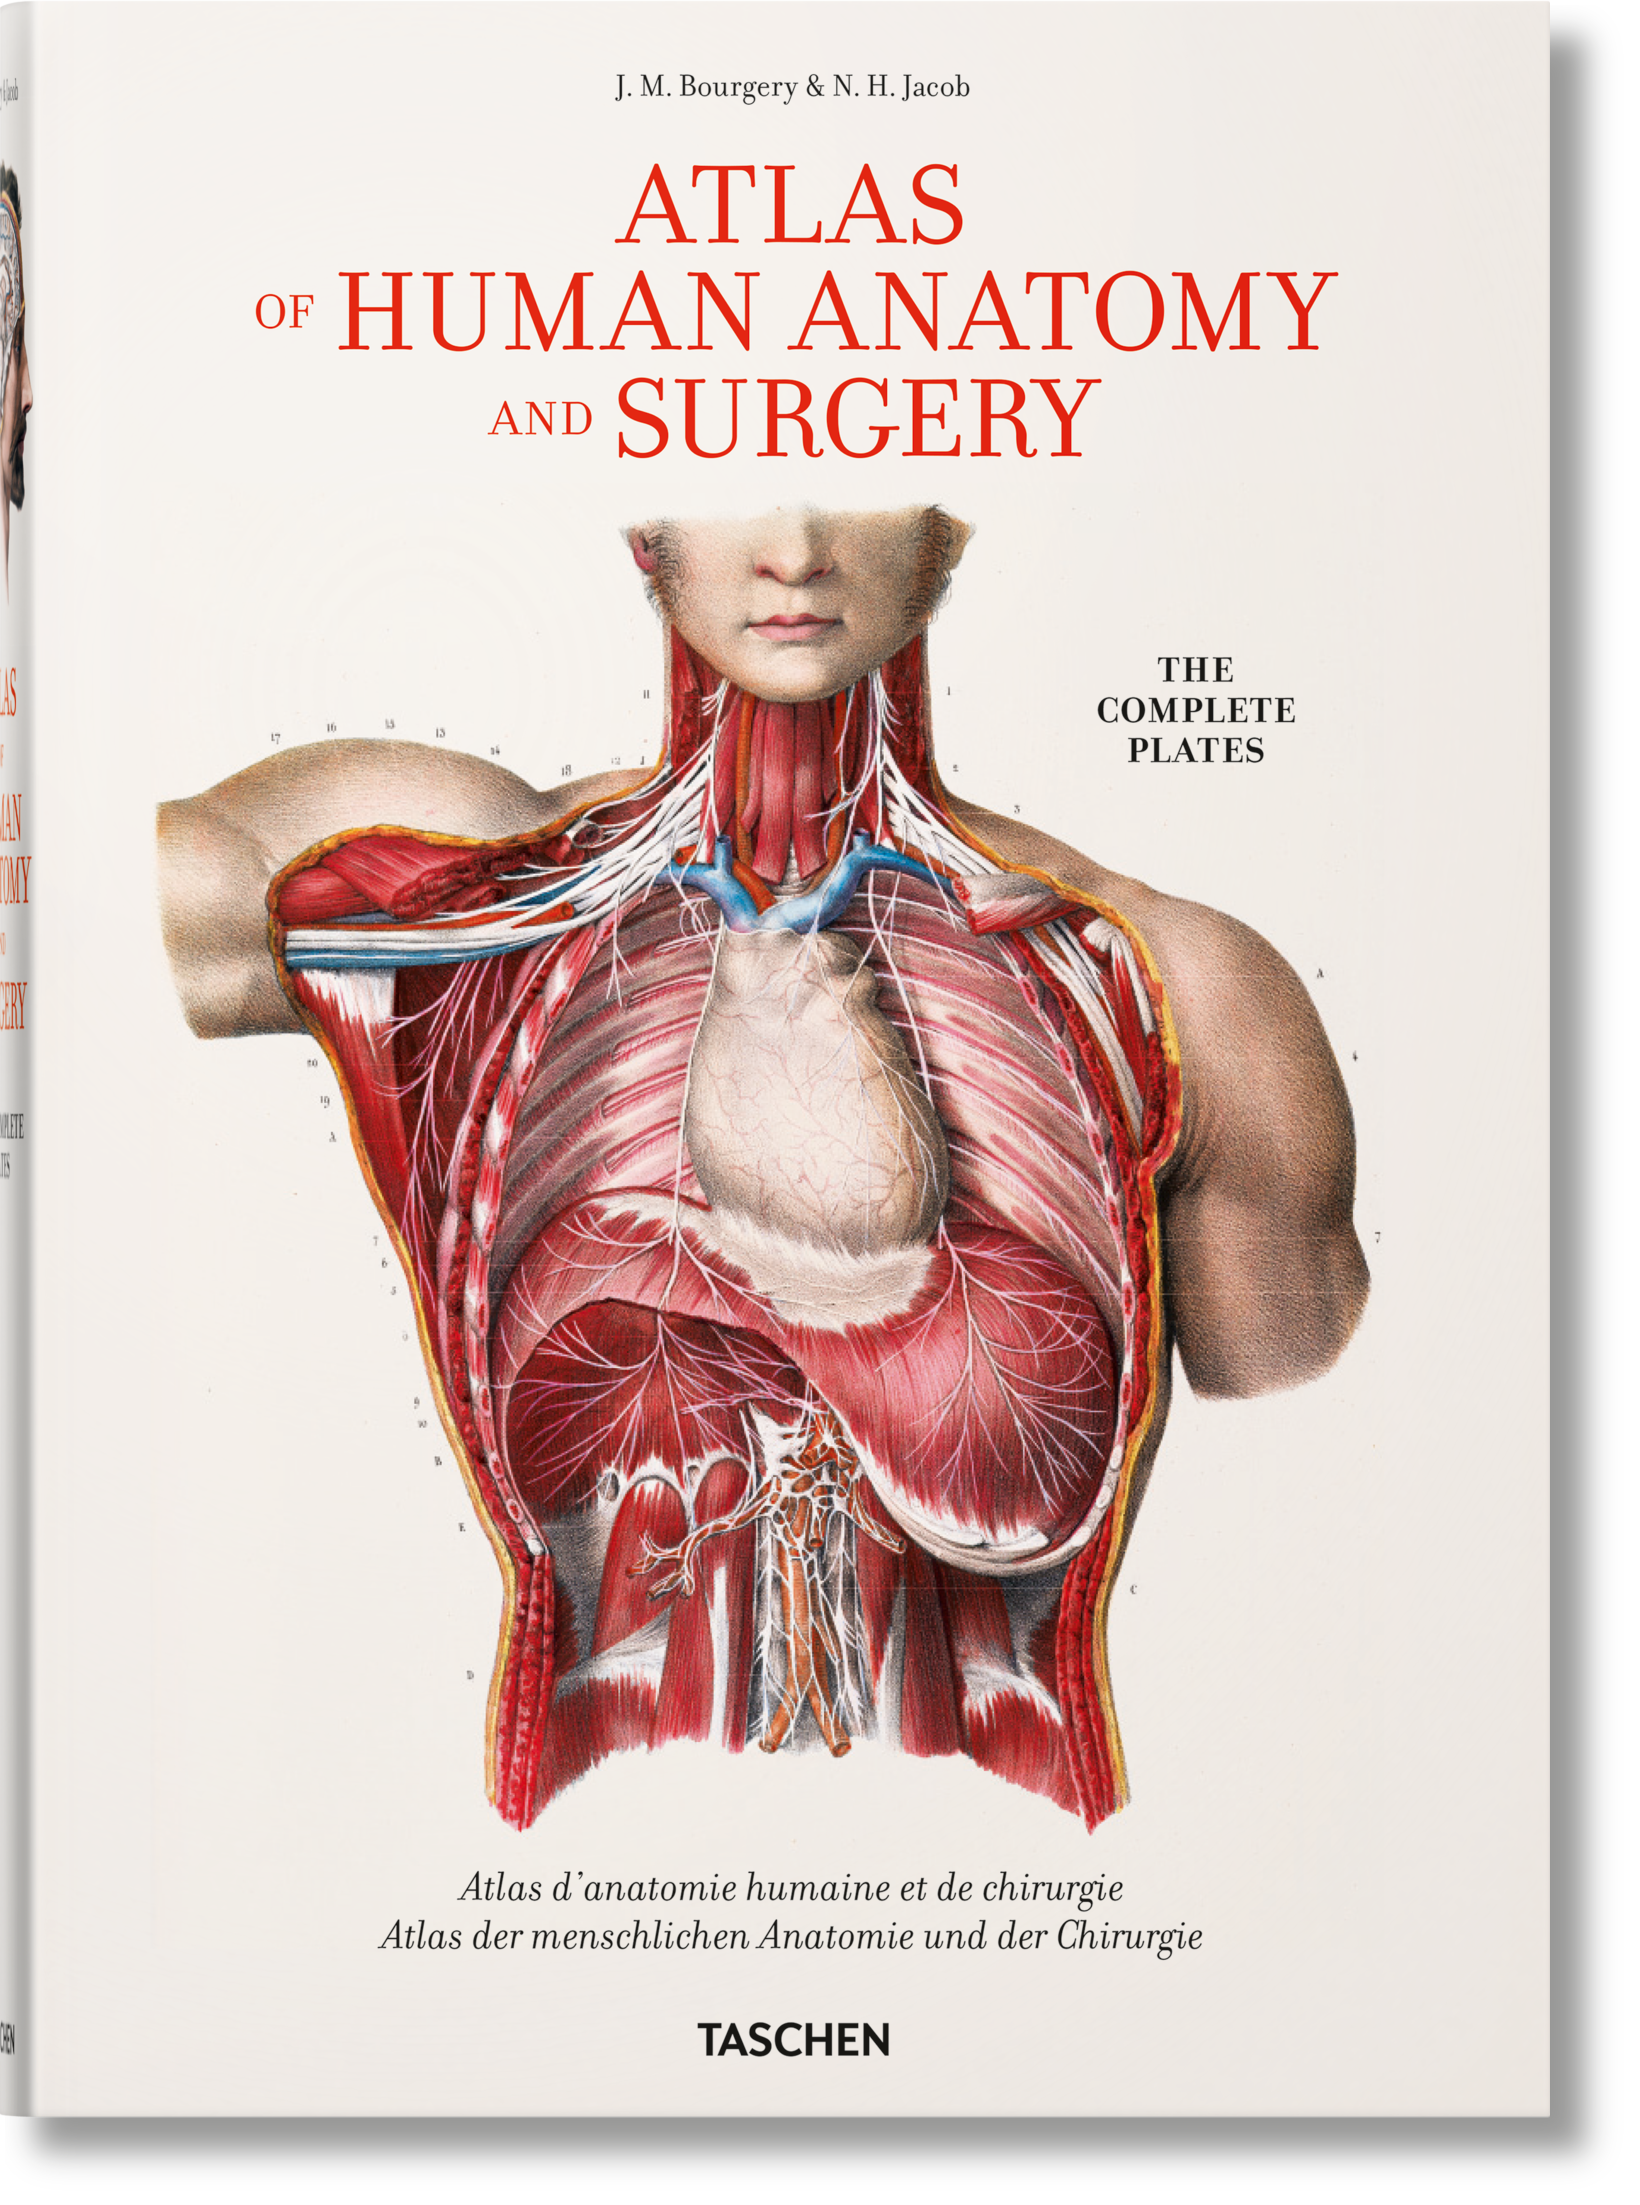 Анатомия книги атласы. Atlas of Human Anatomy and Surgery: the complete Plates by j.m. Bourgery & n.h. Jacob. Атлас анатомии /Bourgery j. m./. Atlas of Human Anatomy and Surgery Taschen.